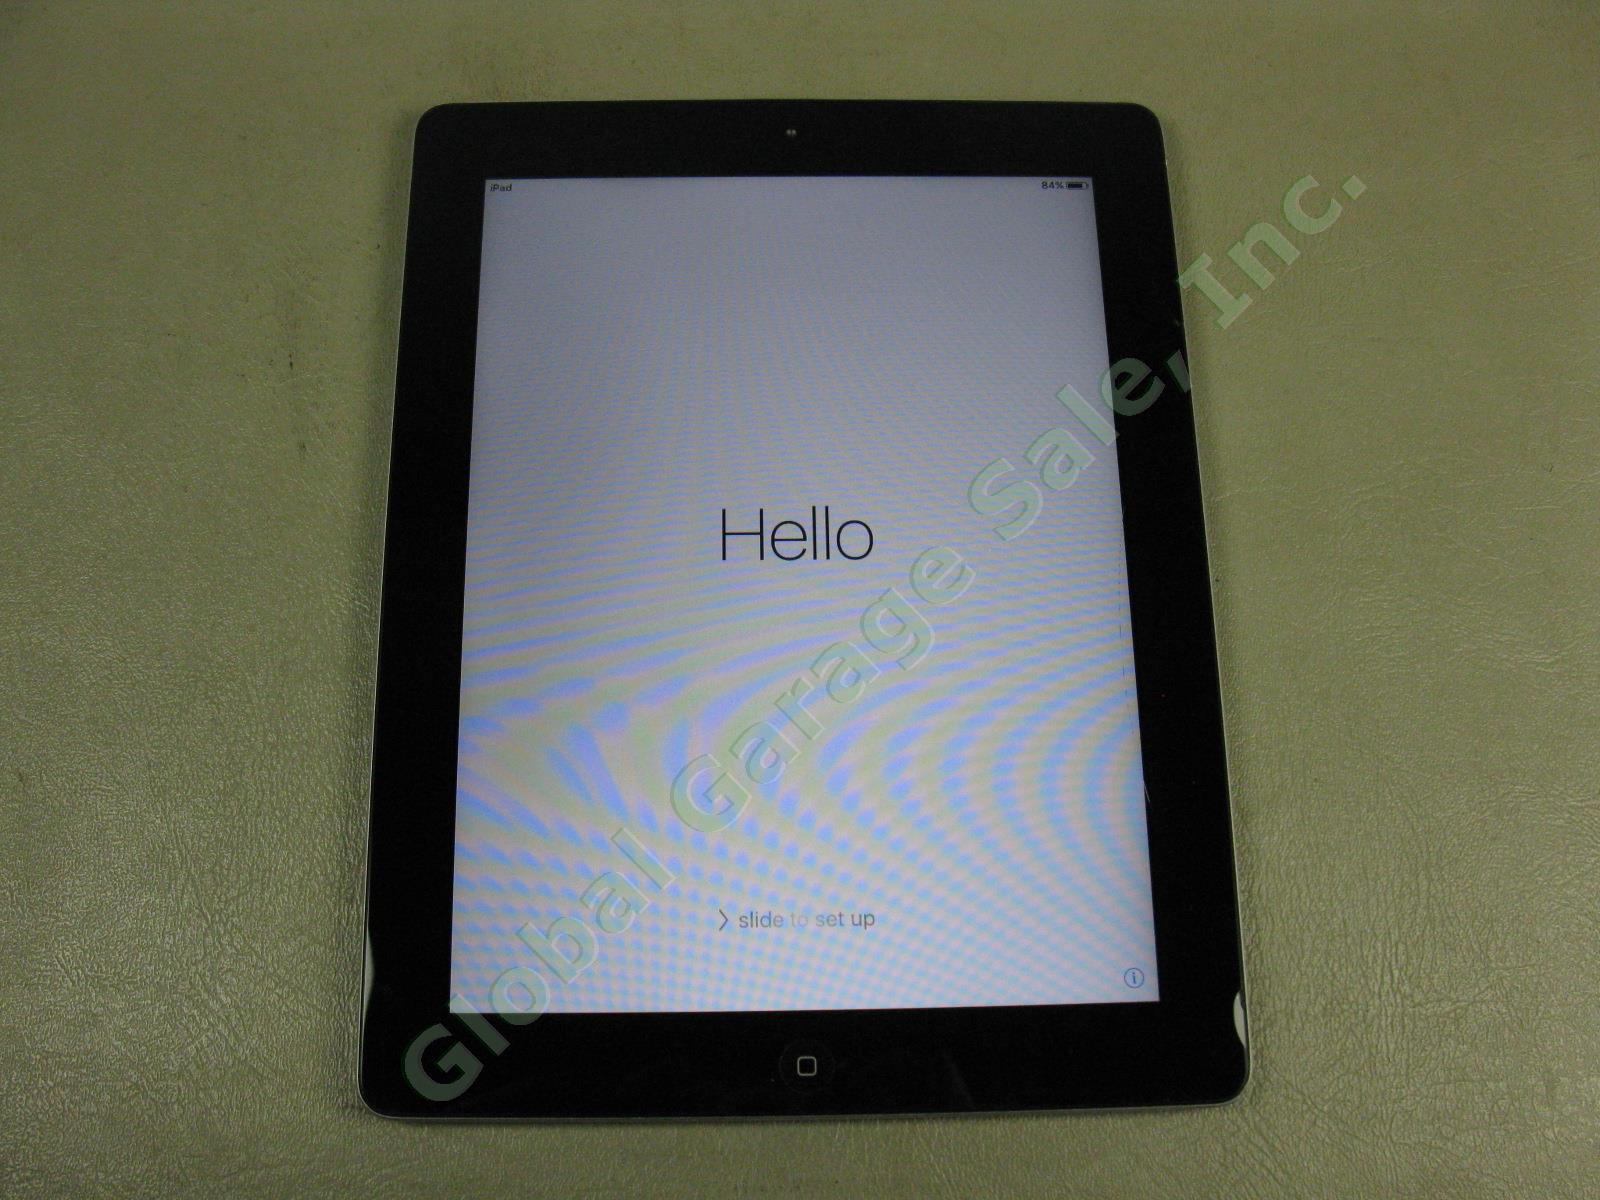 Apple iPad 2 Wifi 32GB Black Tablet MC770LL/A A1395 Works Great Cracked Screen